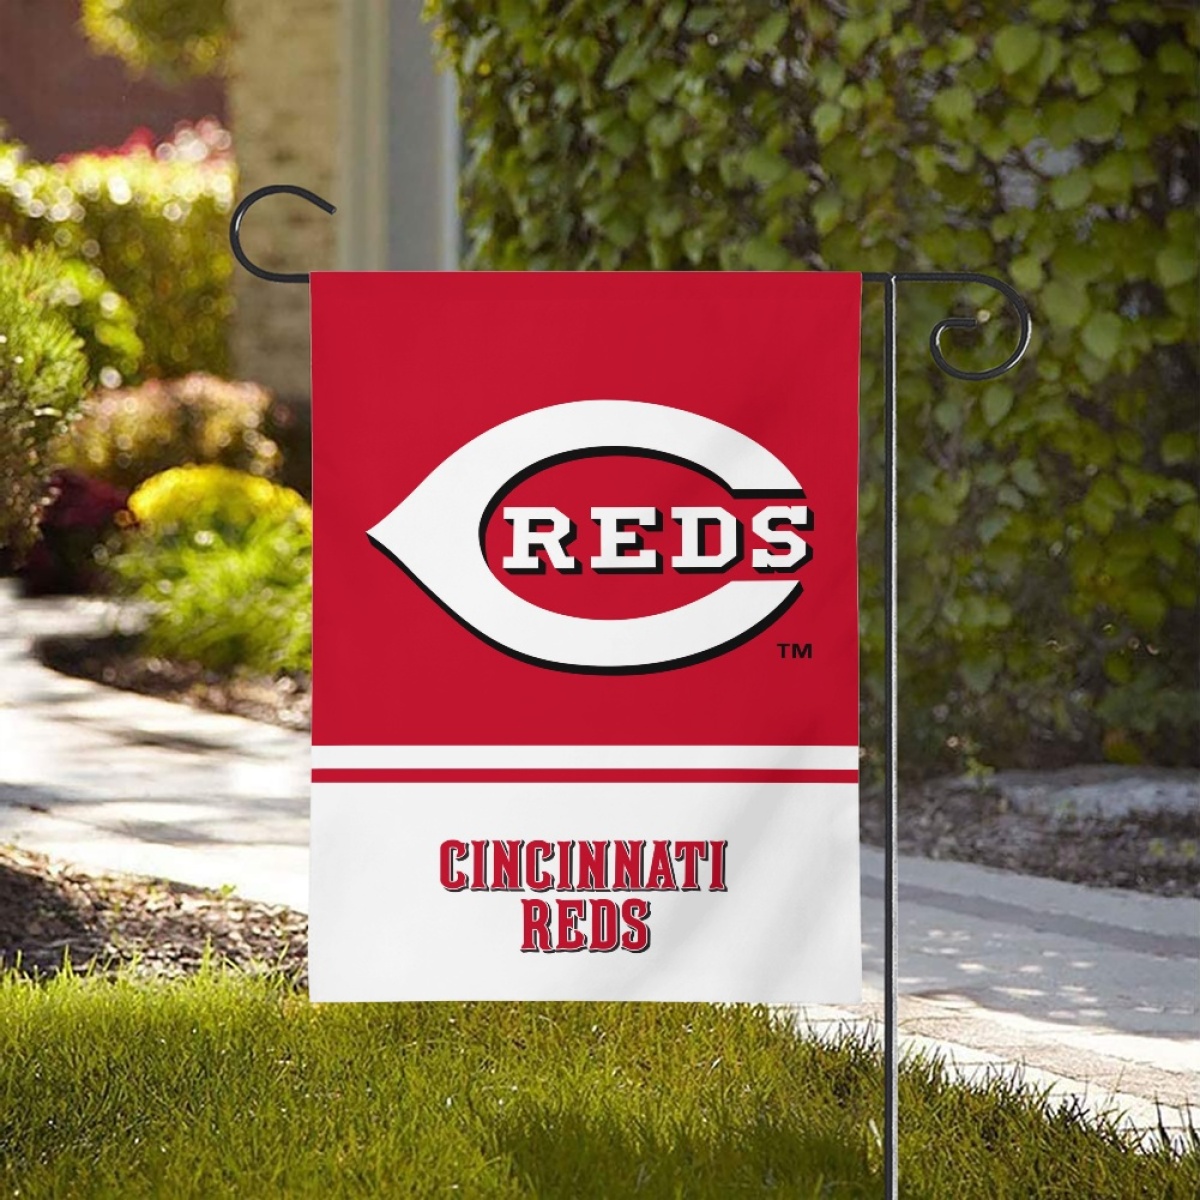 Cincinnati Reds Double-Sided Garden Flag 001 (Pls check description for details)